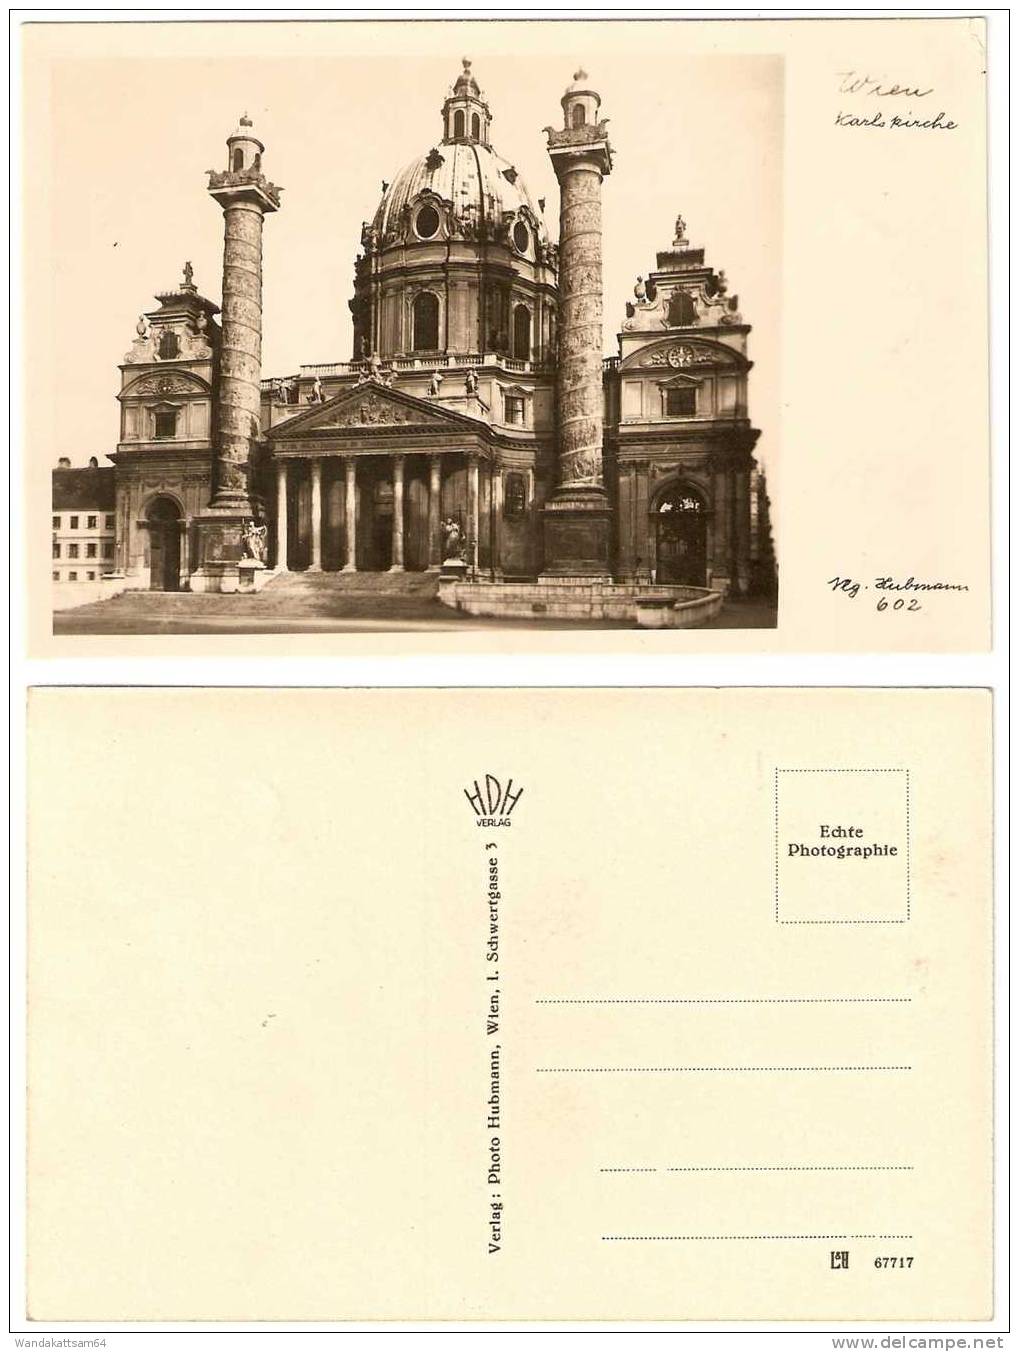 AK Wien, Karlskirche Pg. Hubmann 602 HDH VERLAG Echte Photographie - Églises